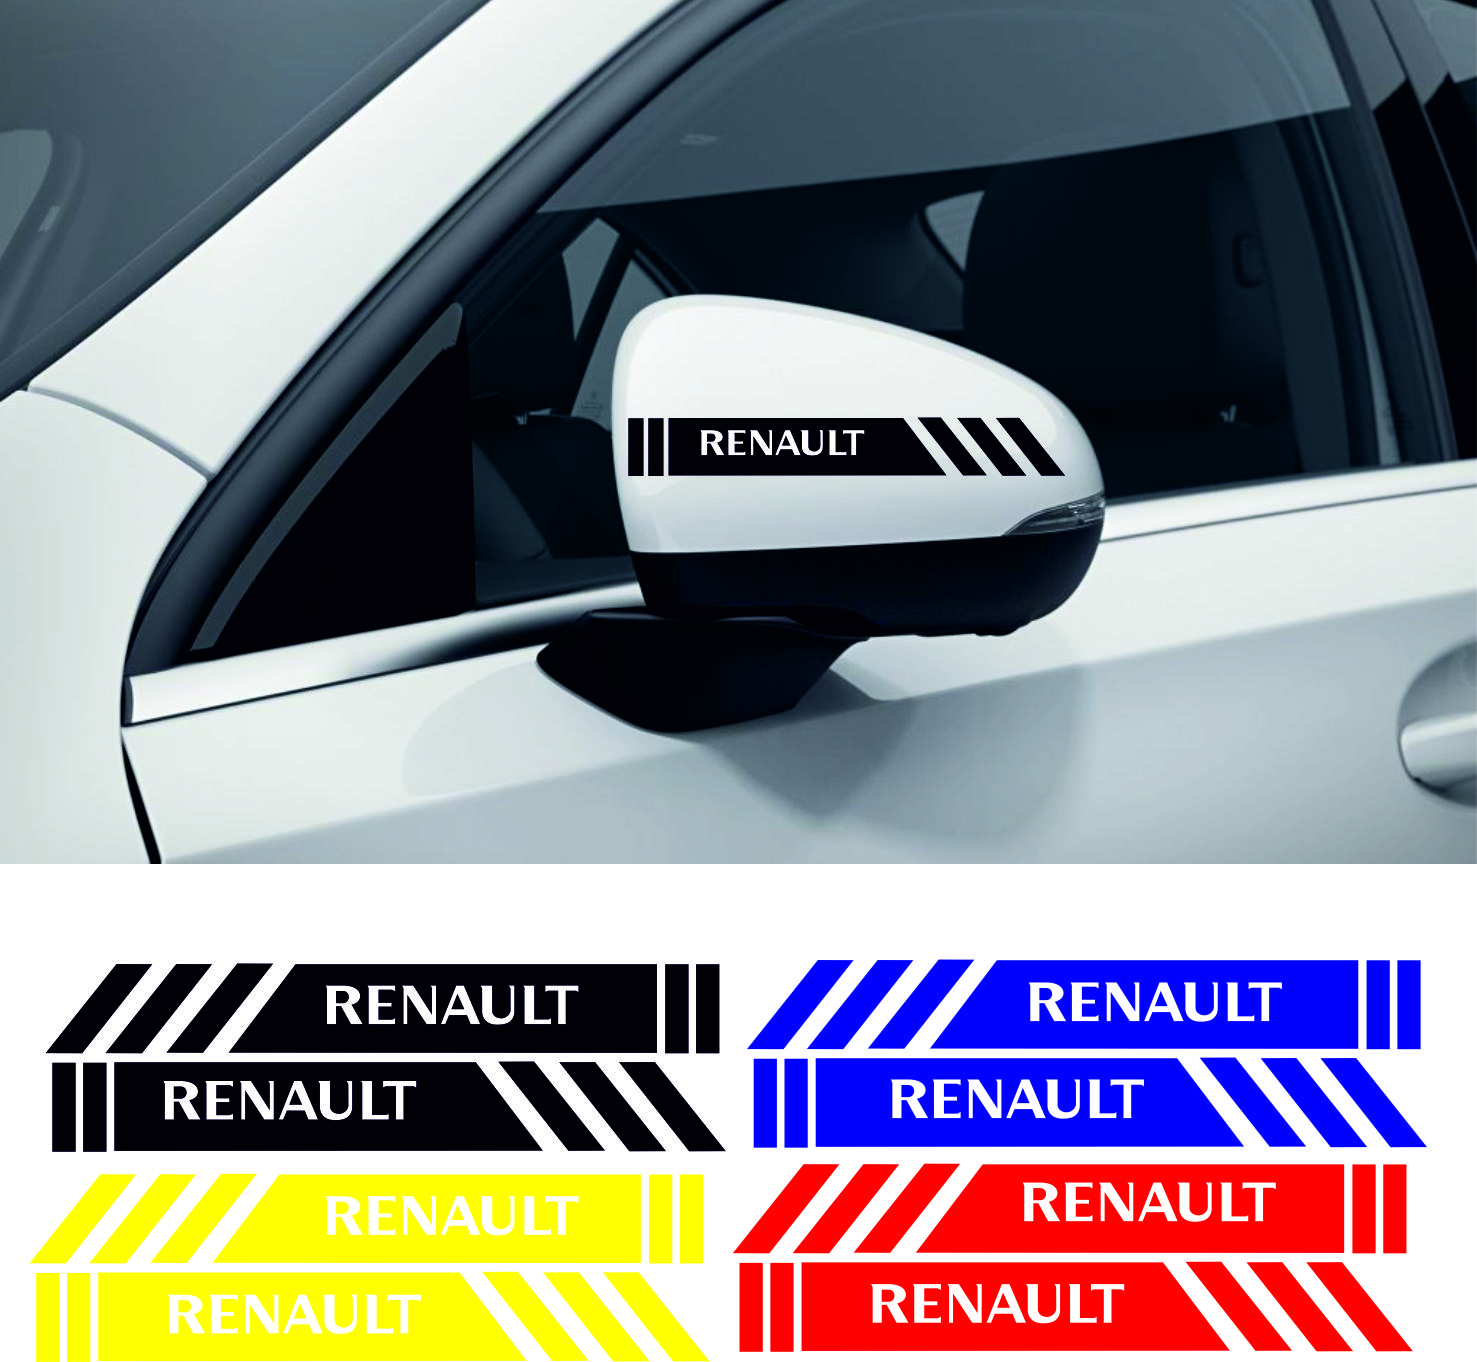 renault sticker 2 - Renault yan ayna şerit sticker